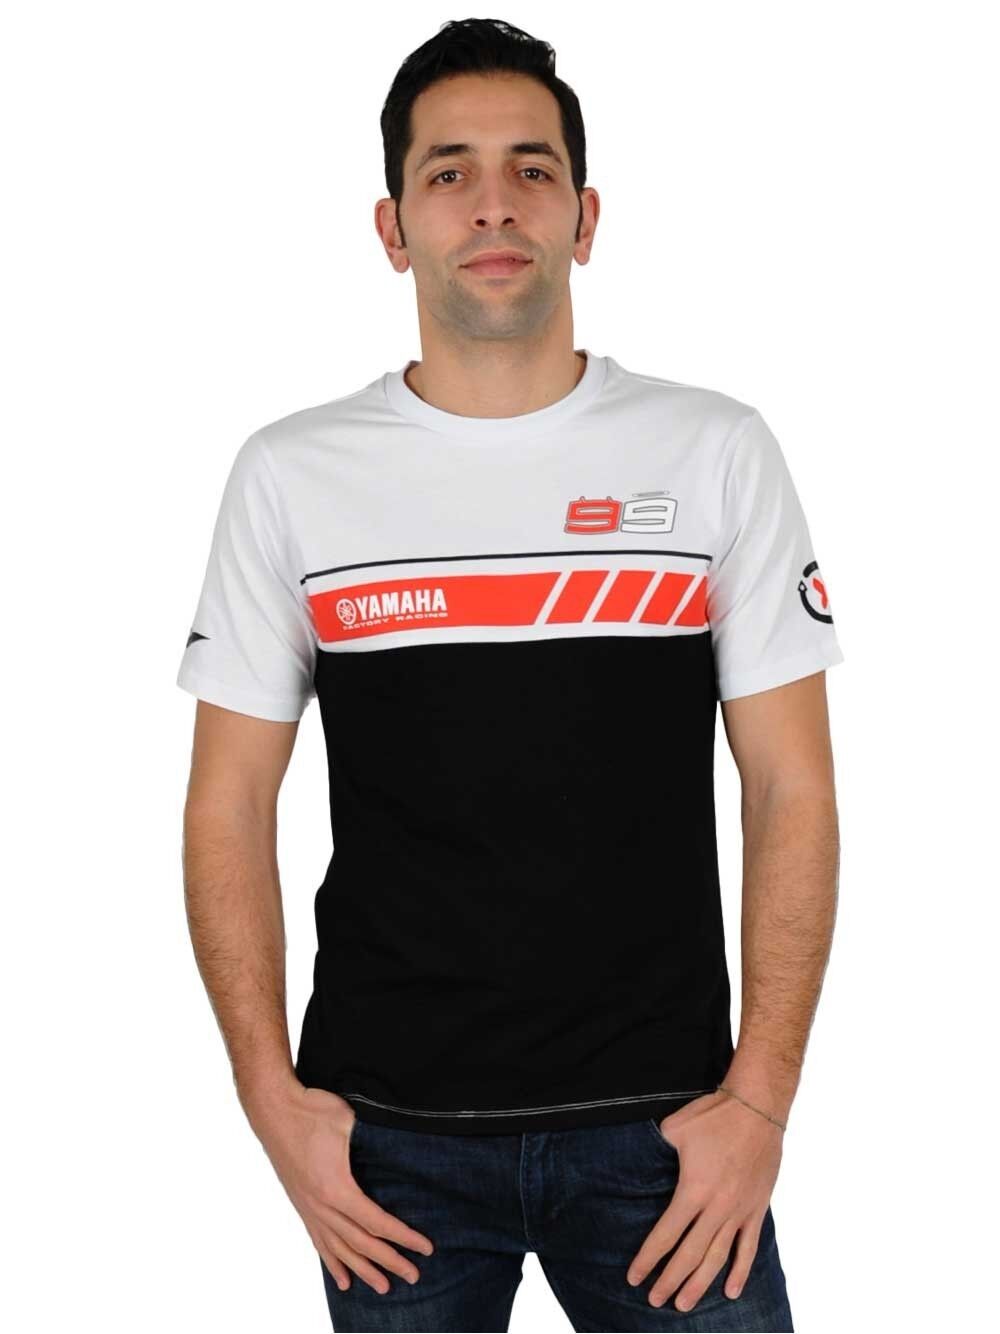 New 2016 Official Jorge Lorenzo Classic Dual Yamaha T-Shirt - 16 37002